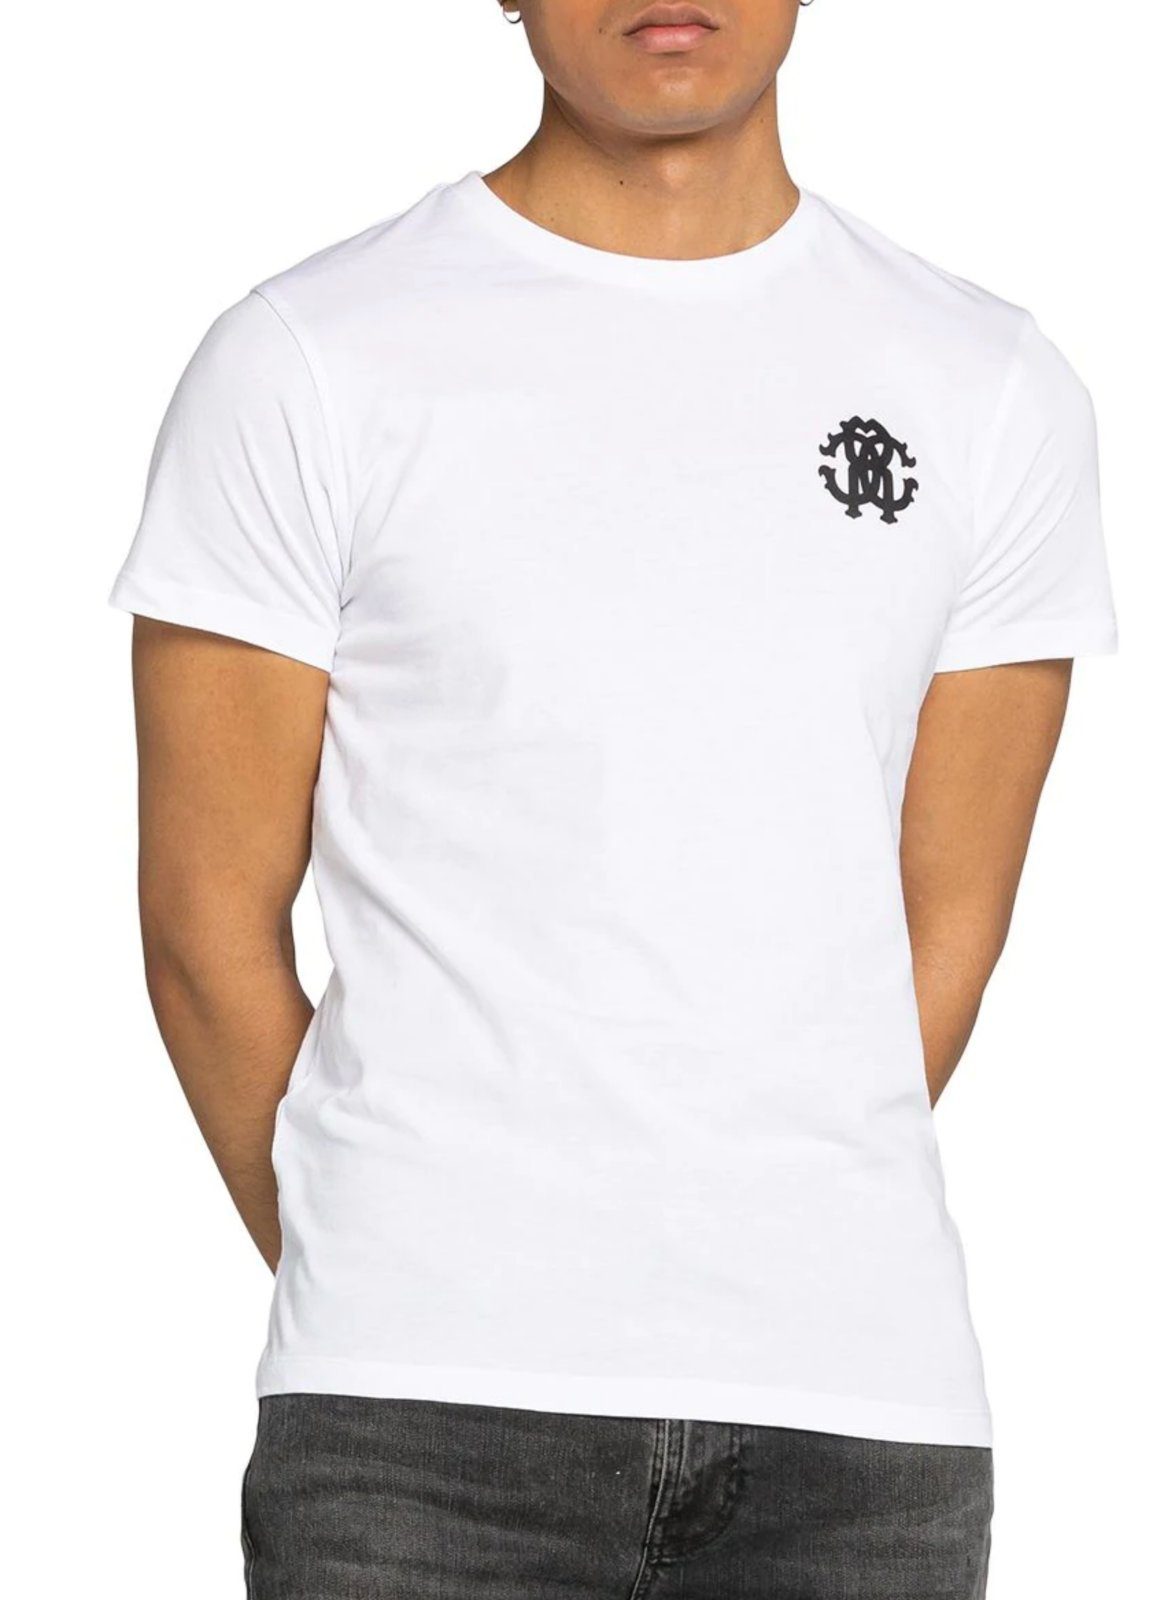 Print-Shirt Print CAVALLI Tiger T-shirt ROBERTO Luxury CLASS Logo Firenze